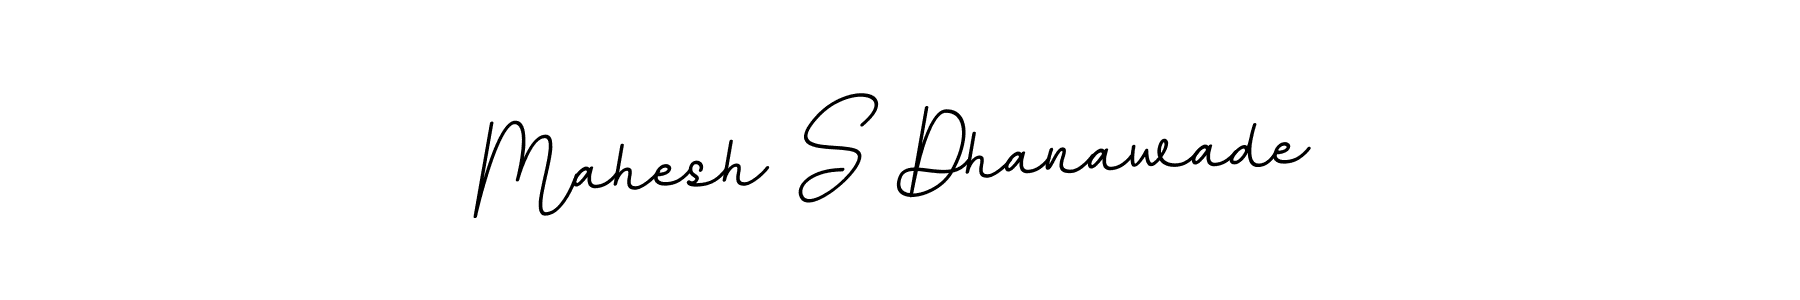 How to Draw Mahesh S Dhanawade signature style? BallpointsItalic-DORy9 is a latest design signature styles for name Mahesh S Dhanawade. Mahesh S Dhanawade signature style 11 images and pictures png